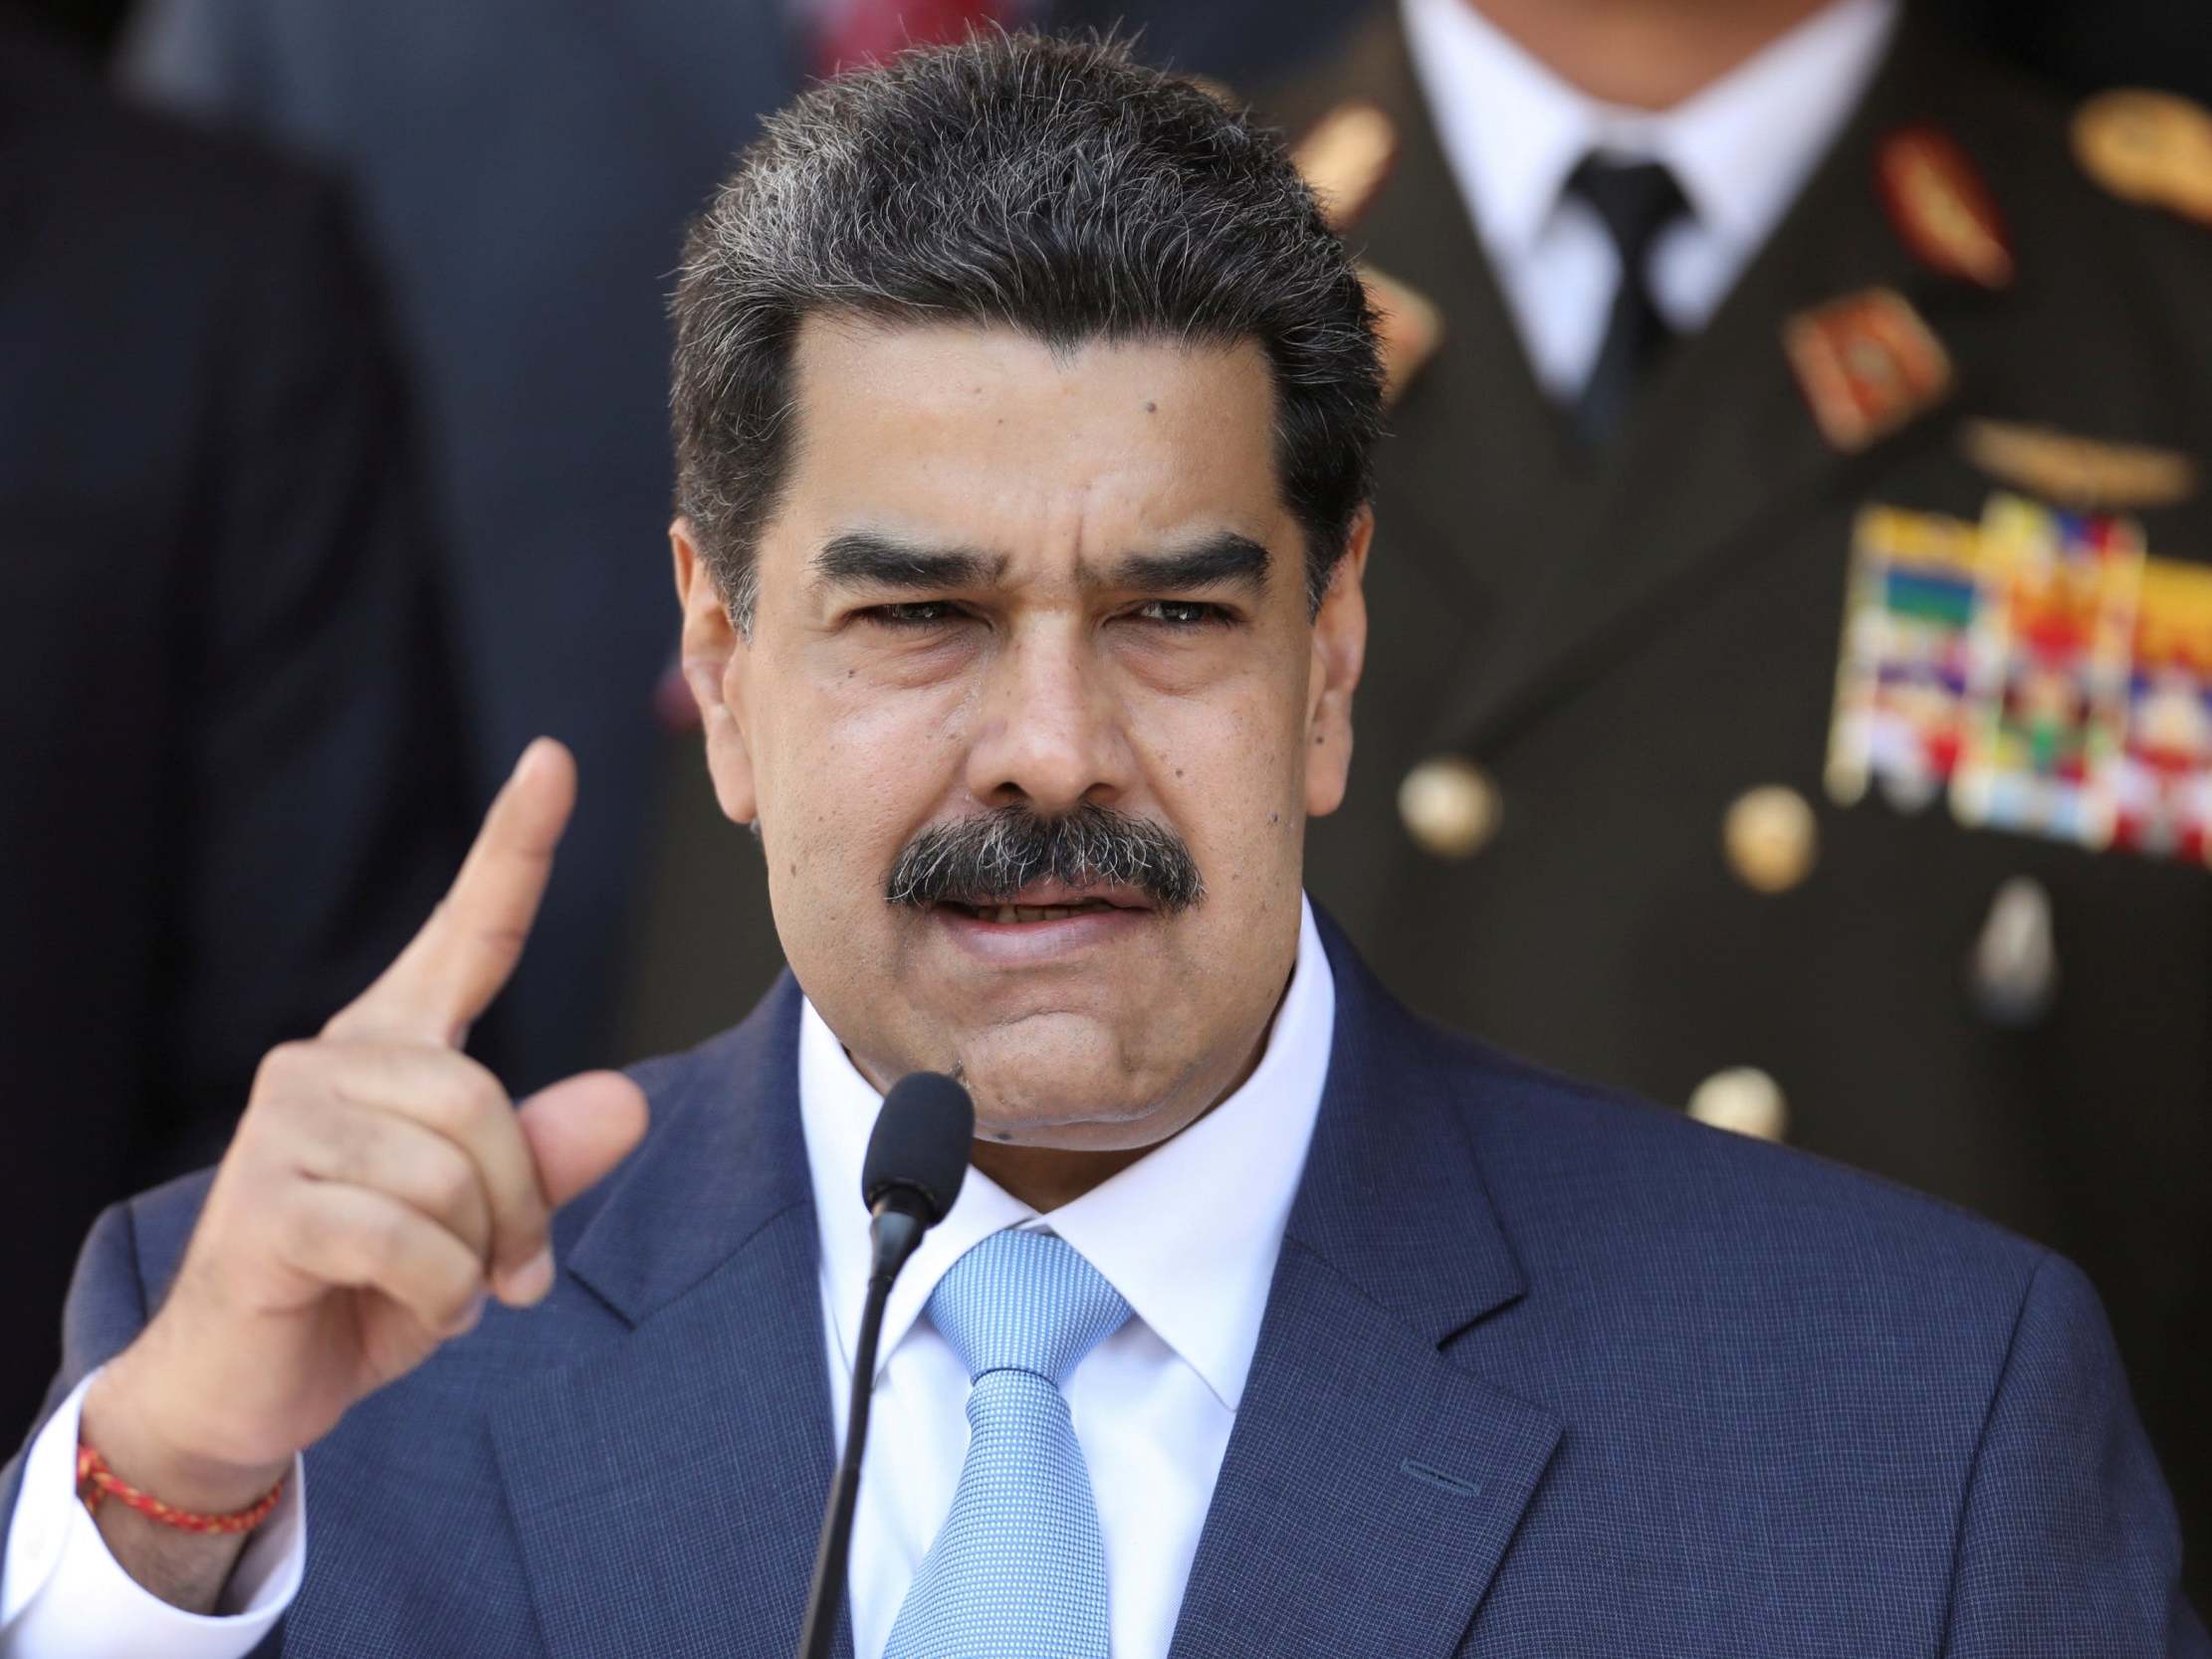 Mr Maduro has been under international pressure to resign since 2019